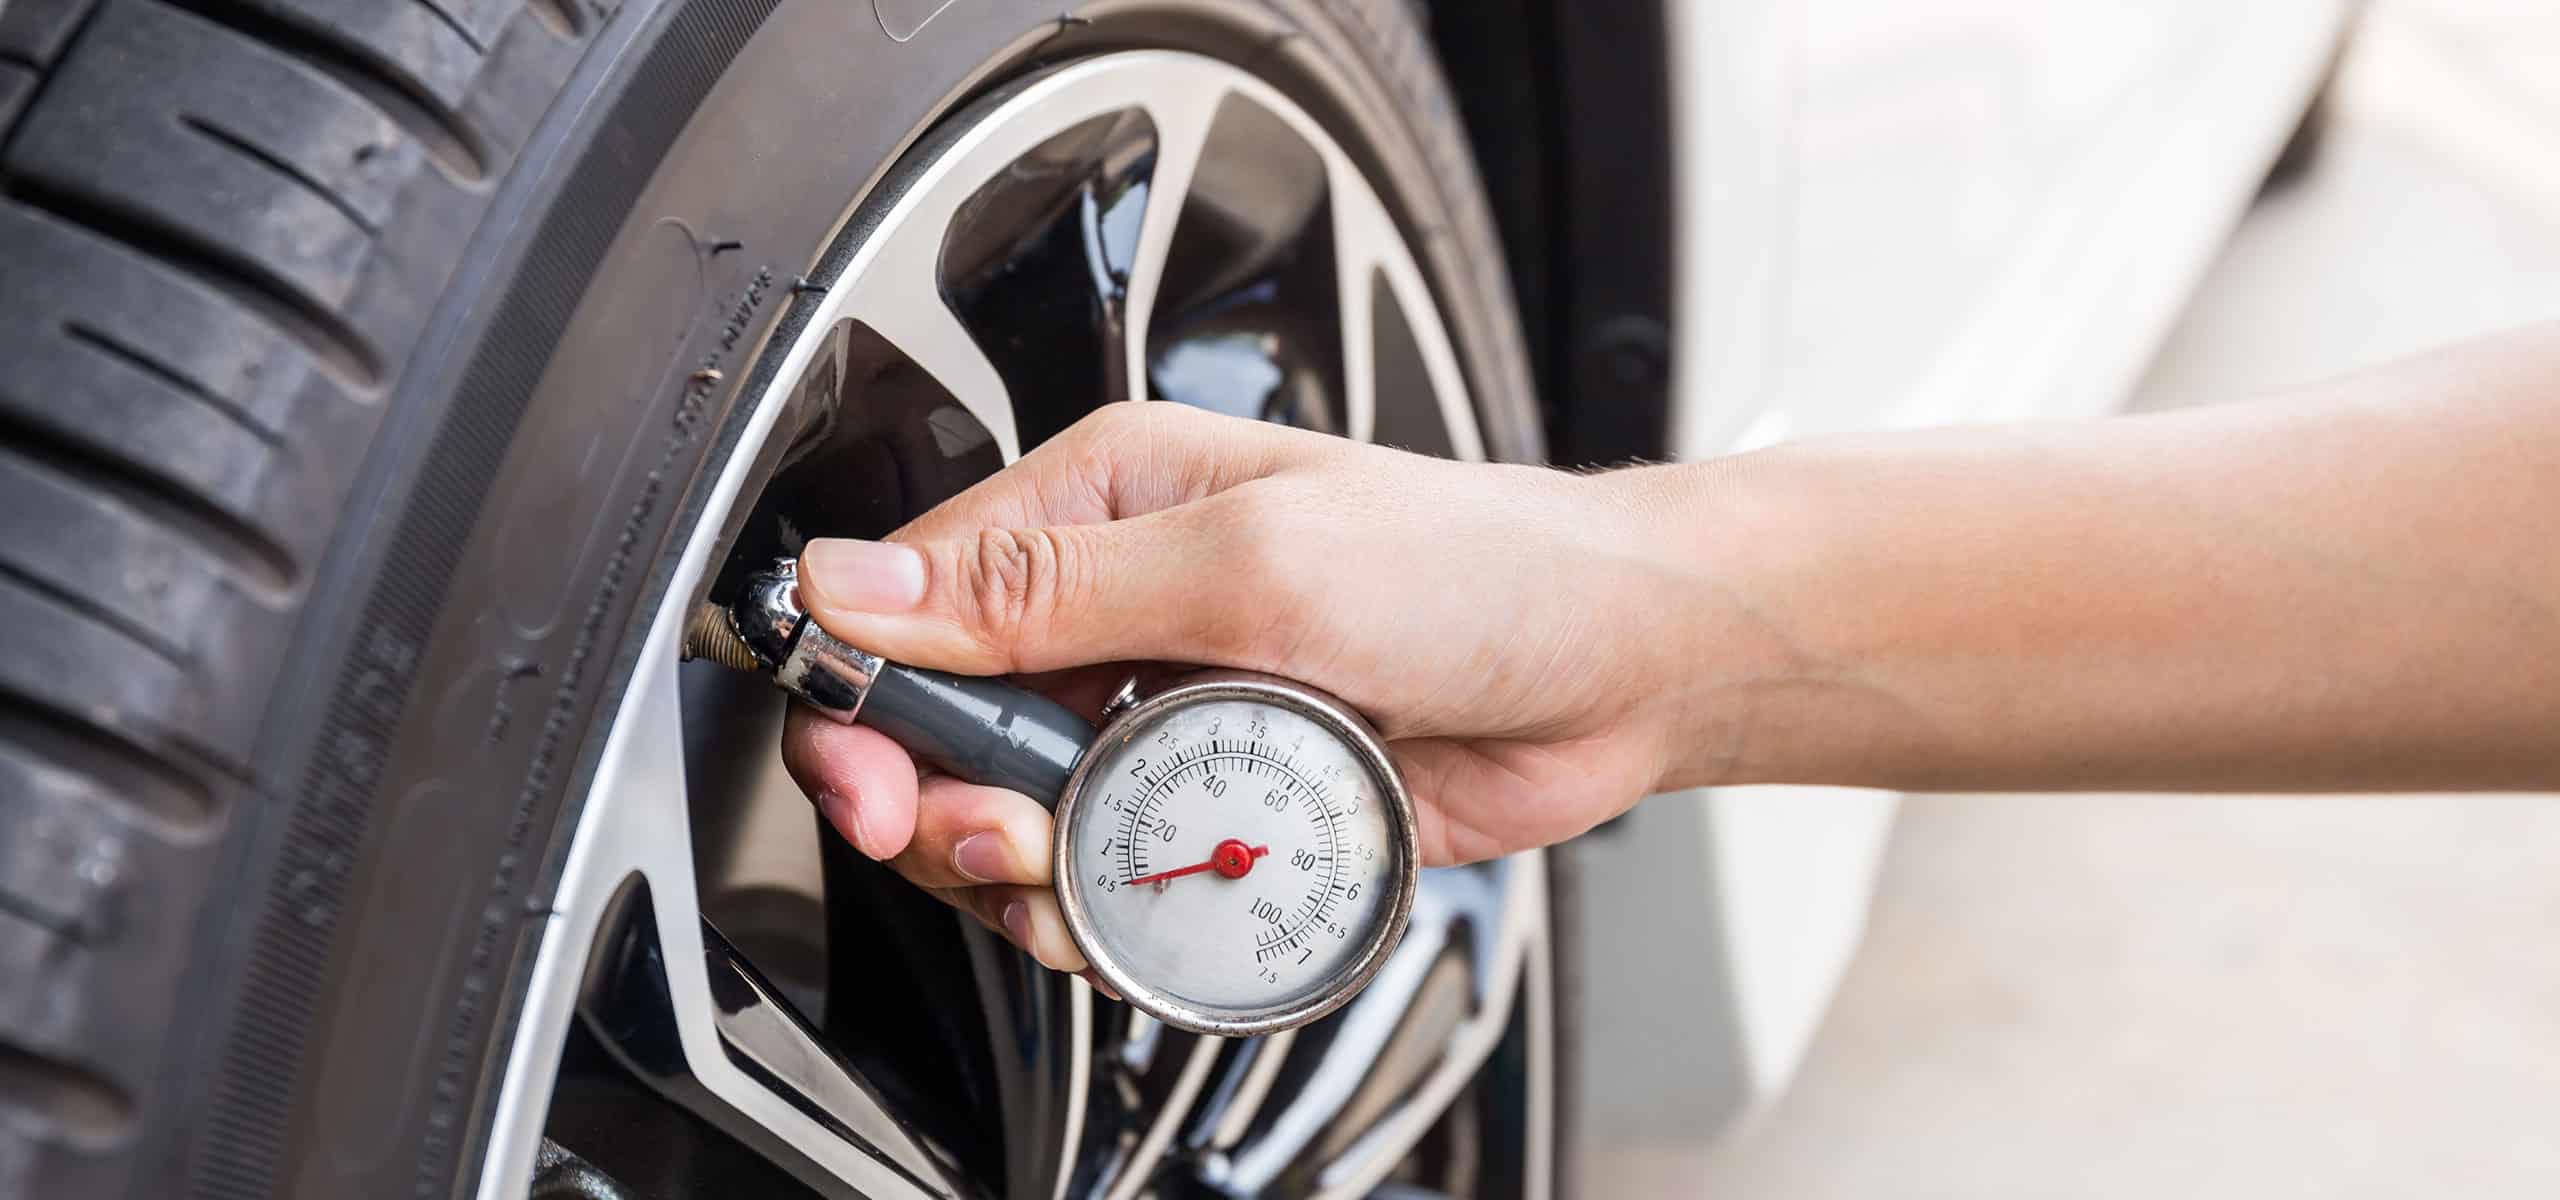 Regular Tyre Pressure Checking New Tyre